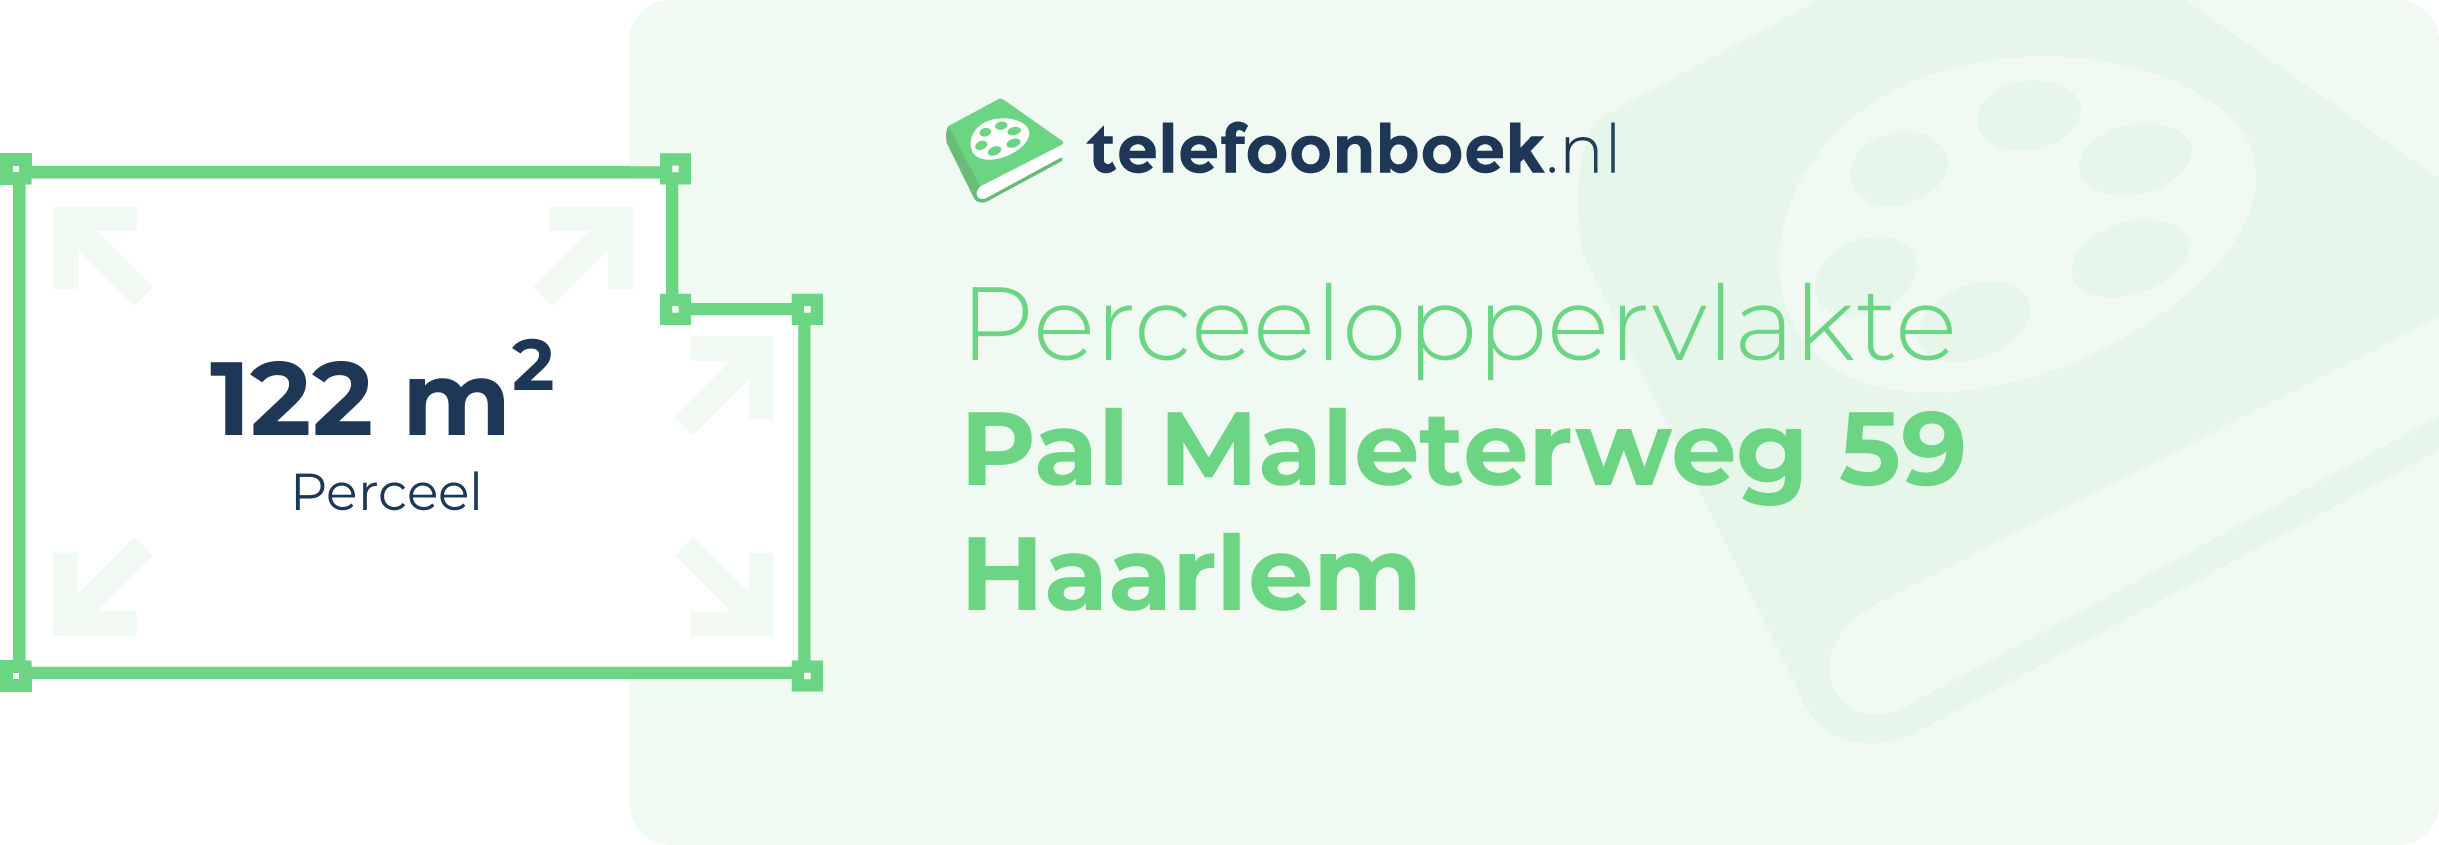 Perceeloppervlakte Pal Maleterweg 59 Haarlem